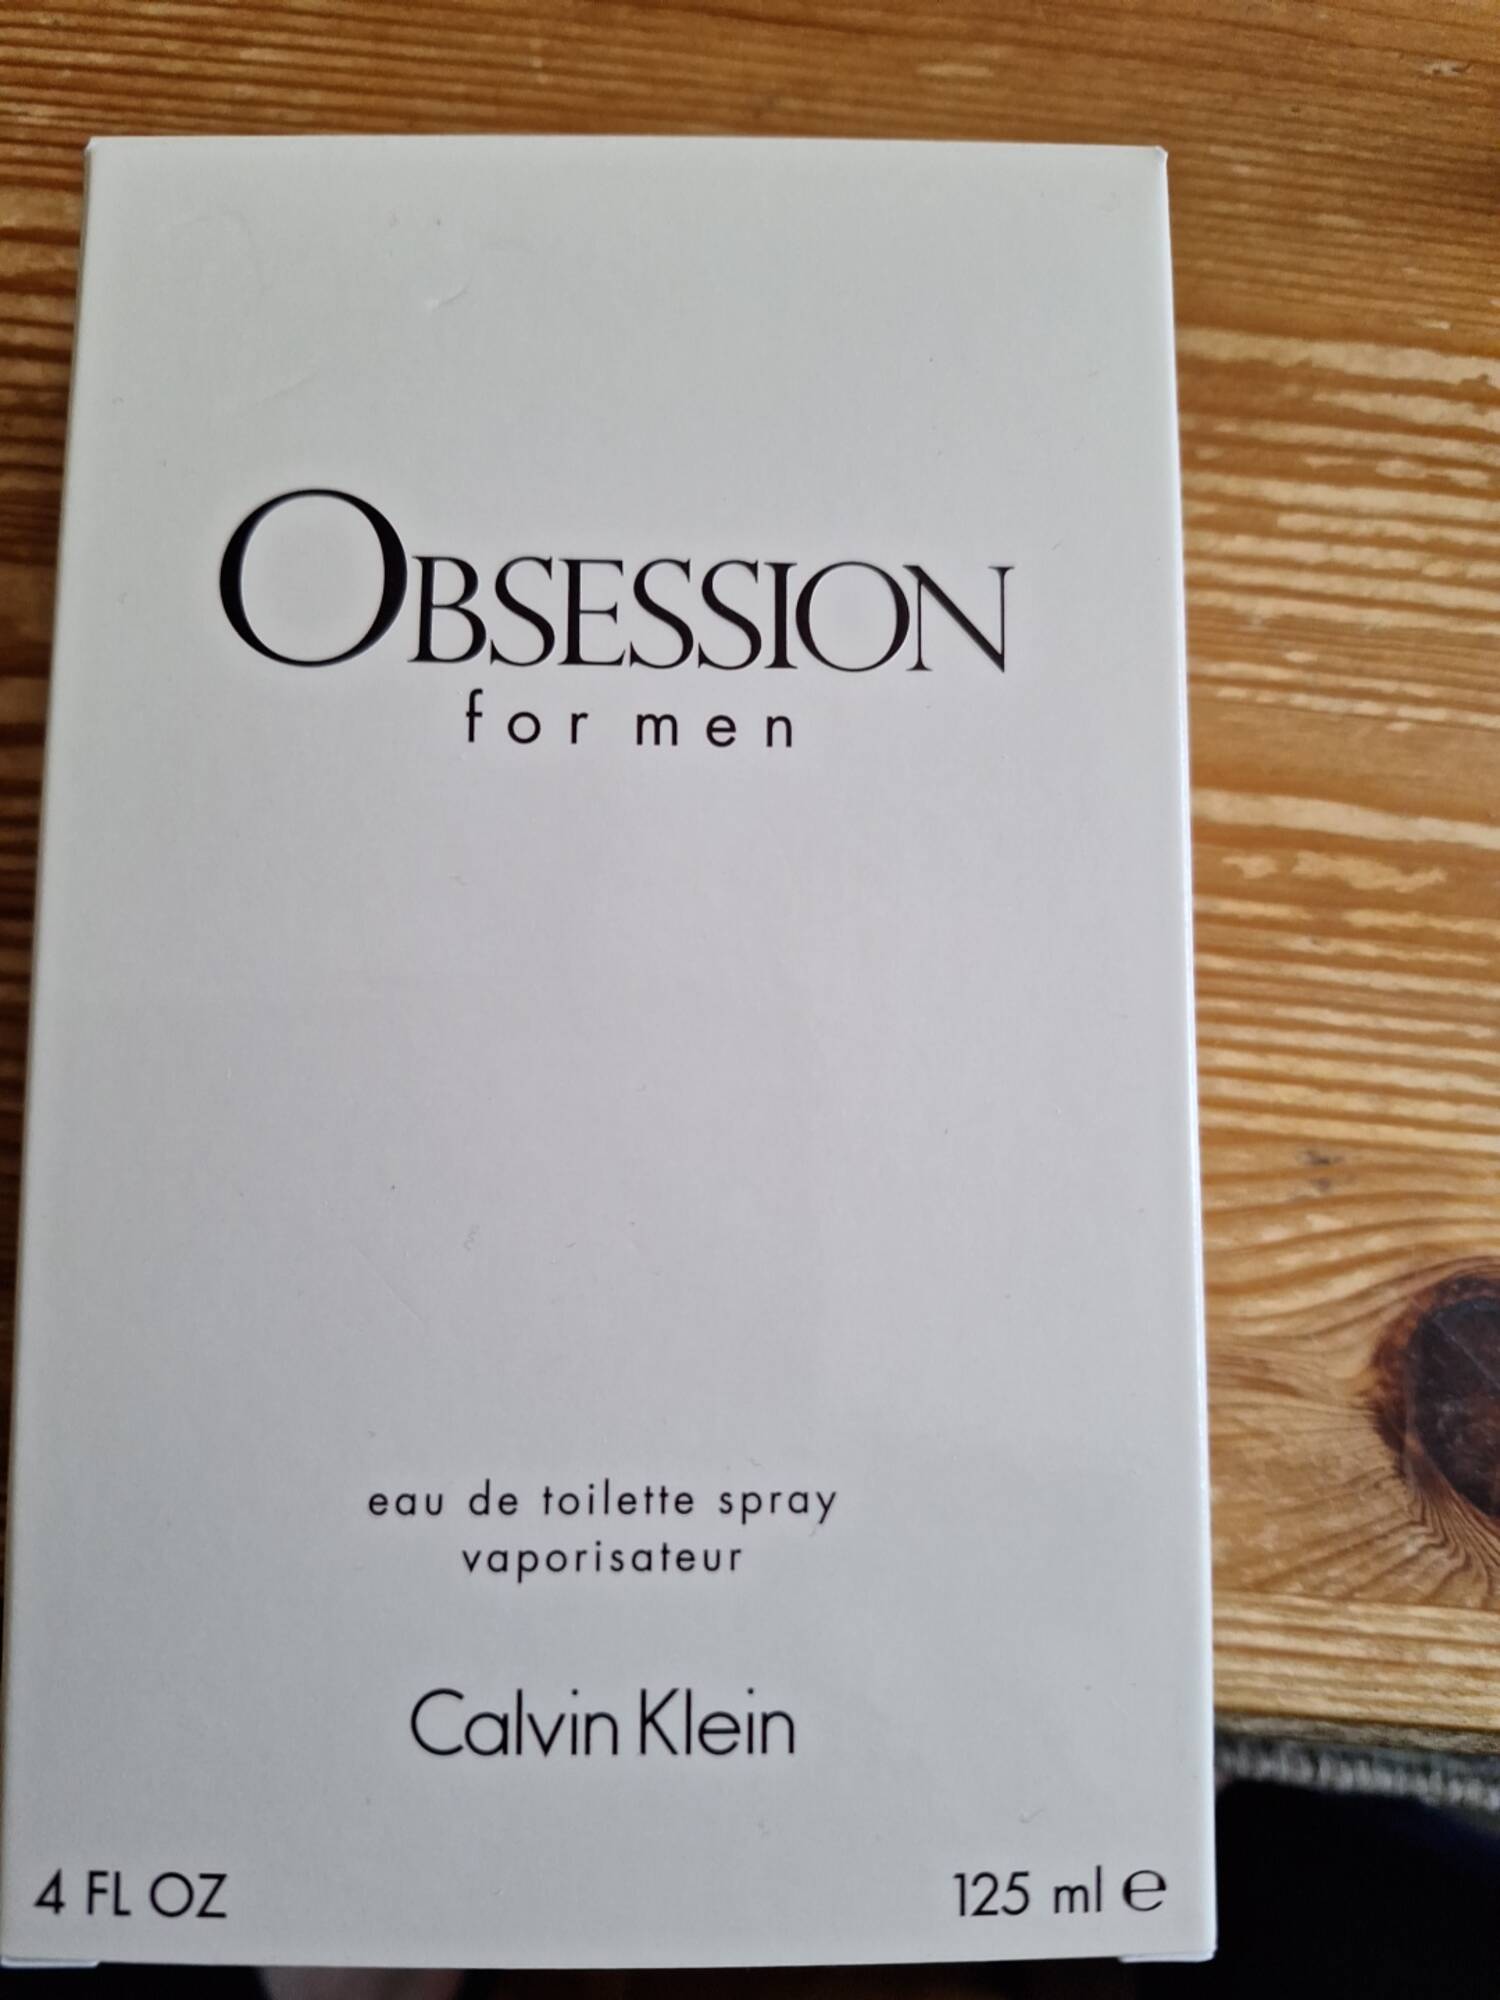 CALVIN KLEIN - Obsession for men - Eau de toilette spray